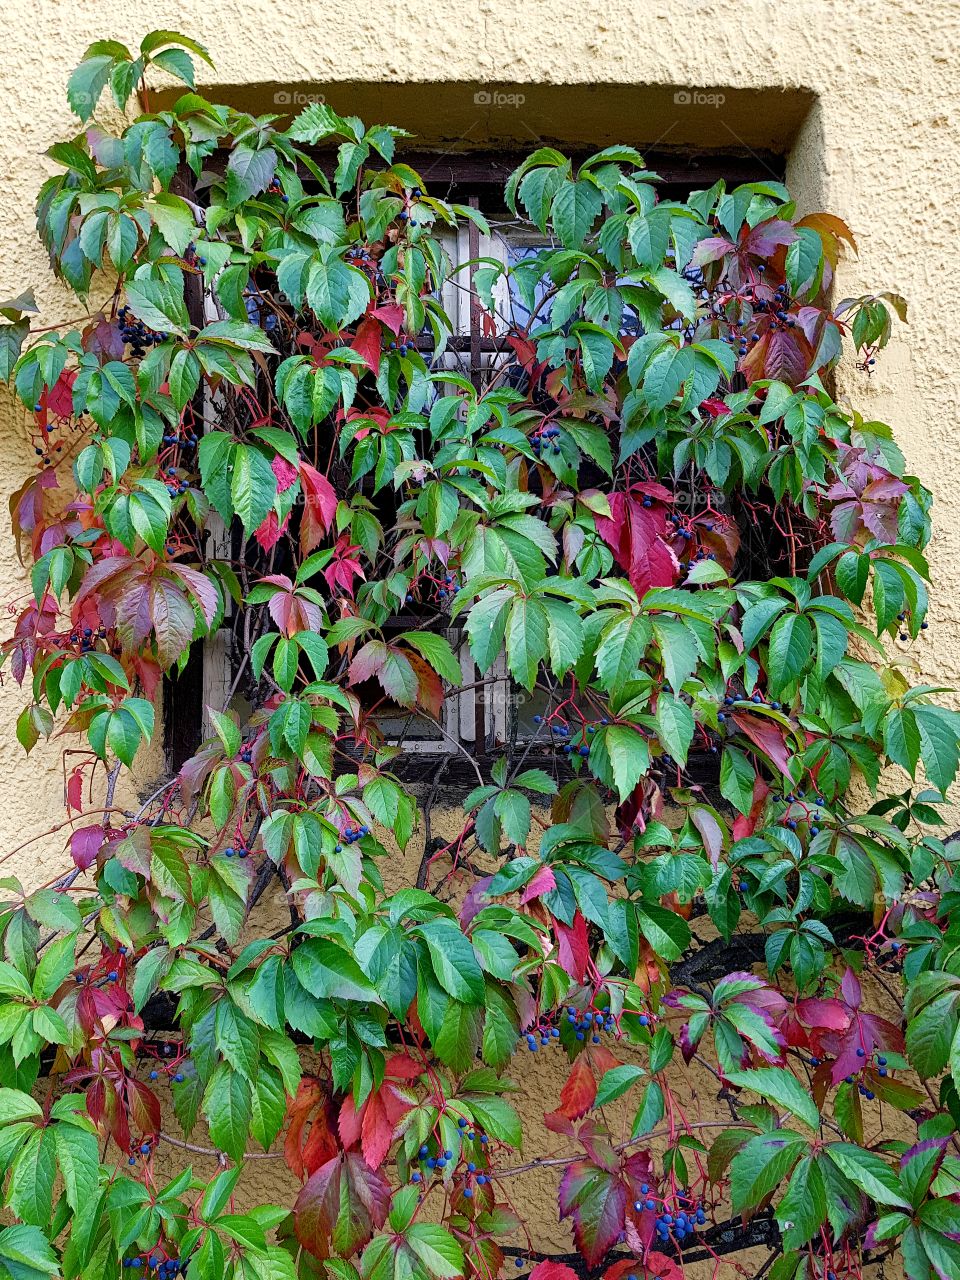 window in the autumn